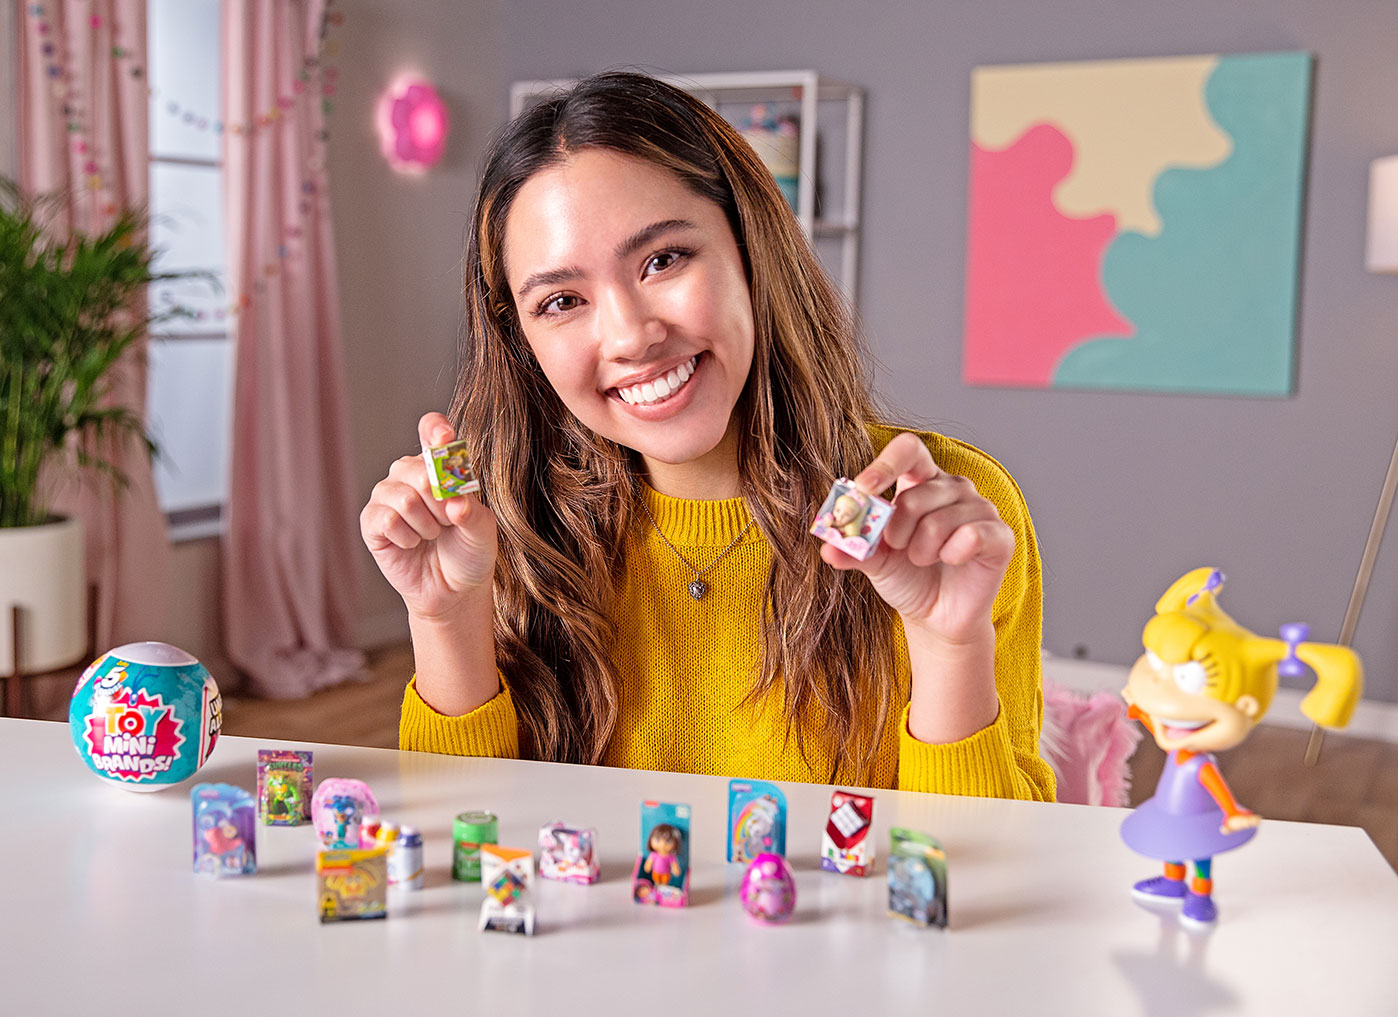 5 Surprise - Toy Mini Brands